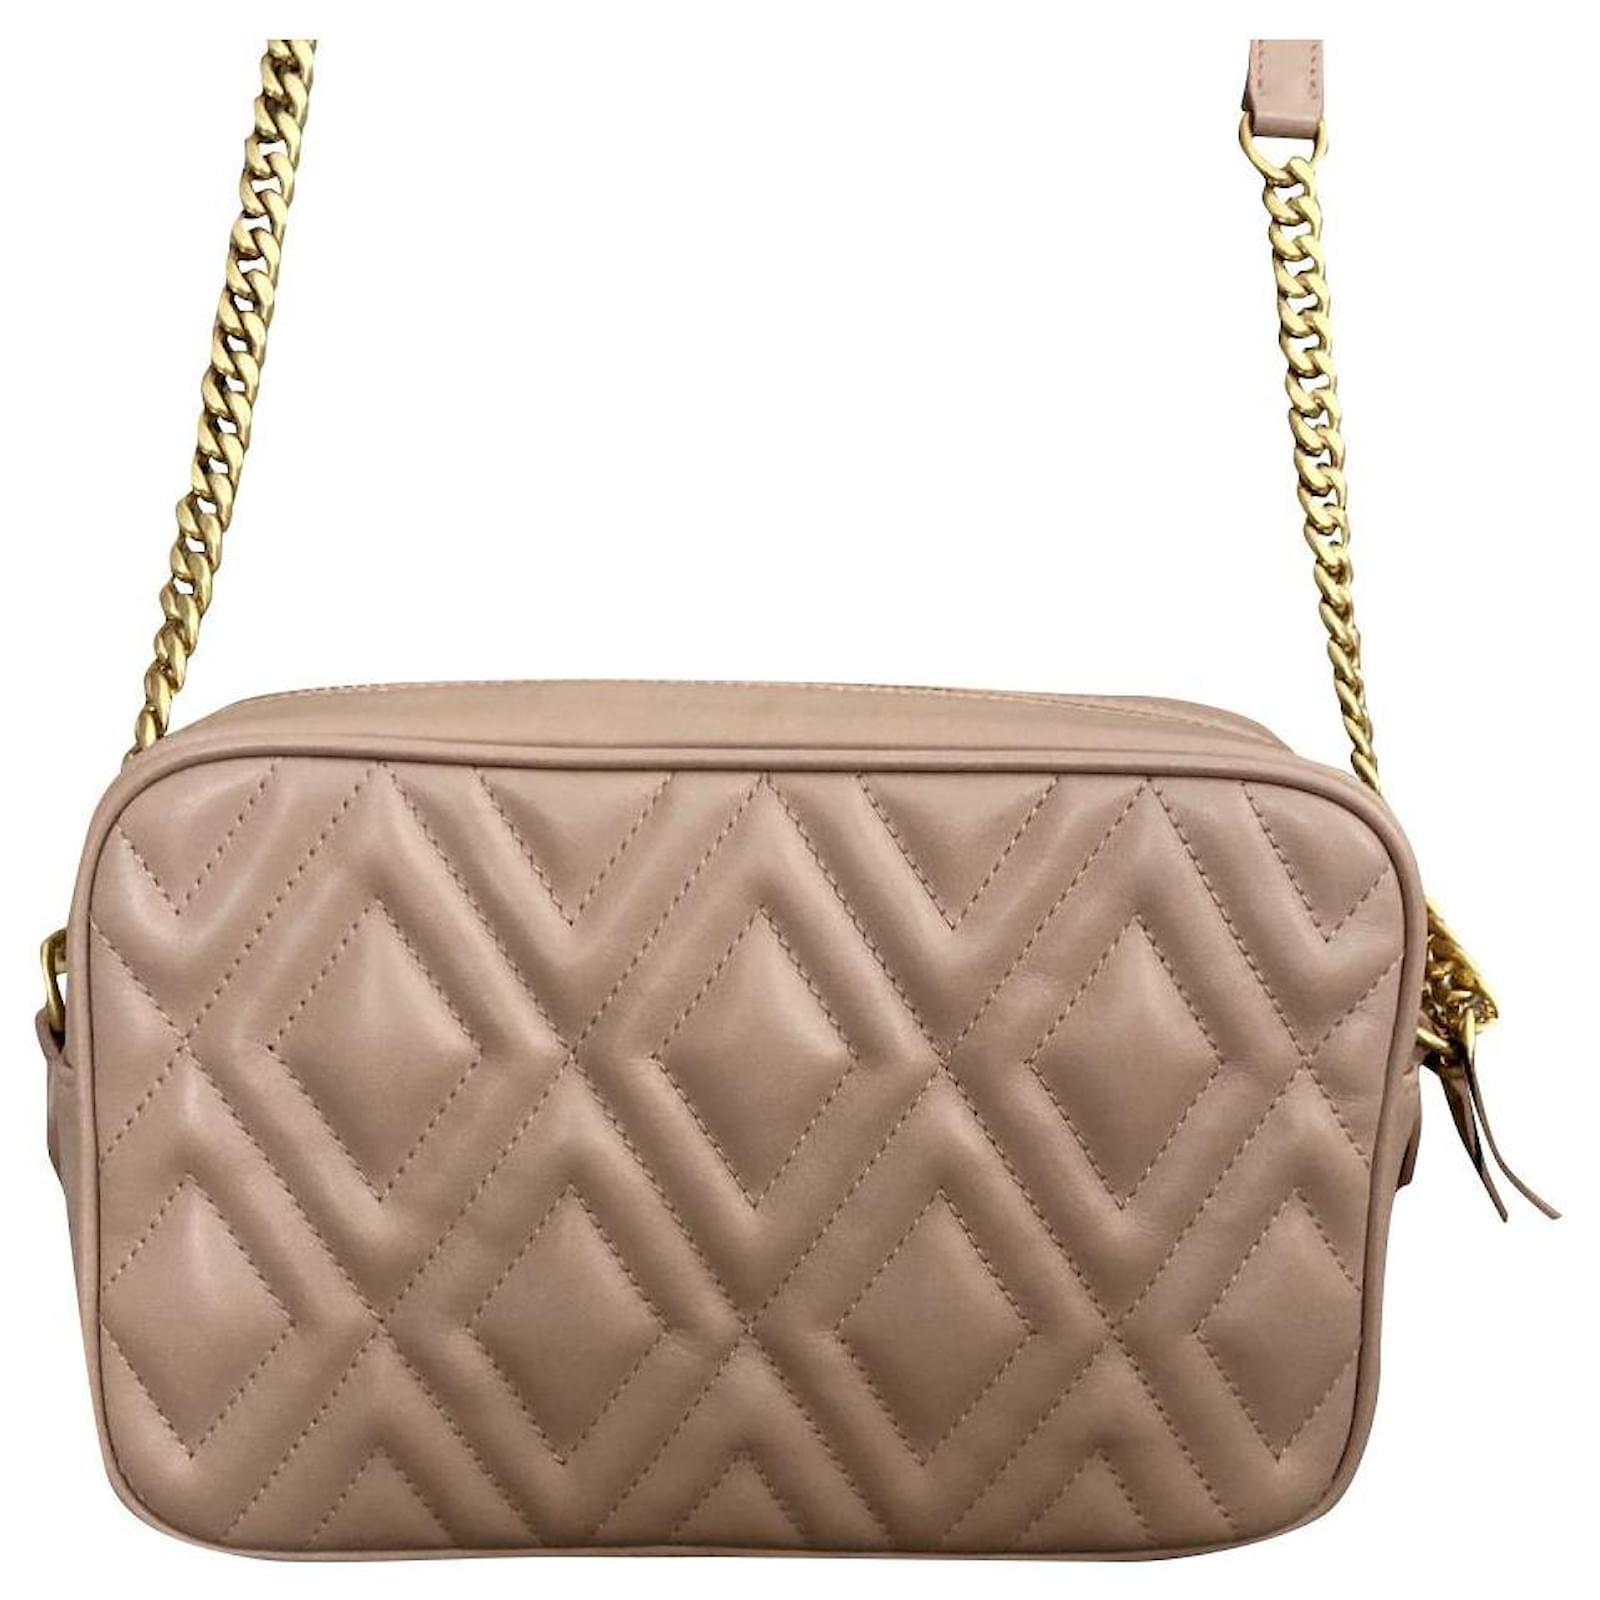 Miu Miu Pre-owned Women's Leather Handbag - Beige - One Size